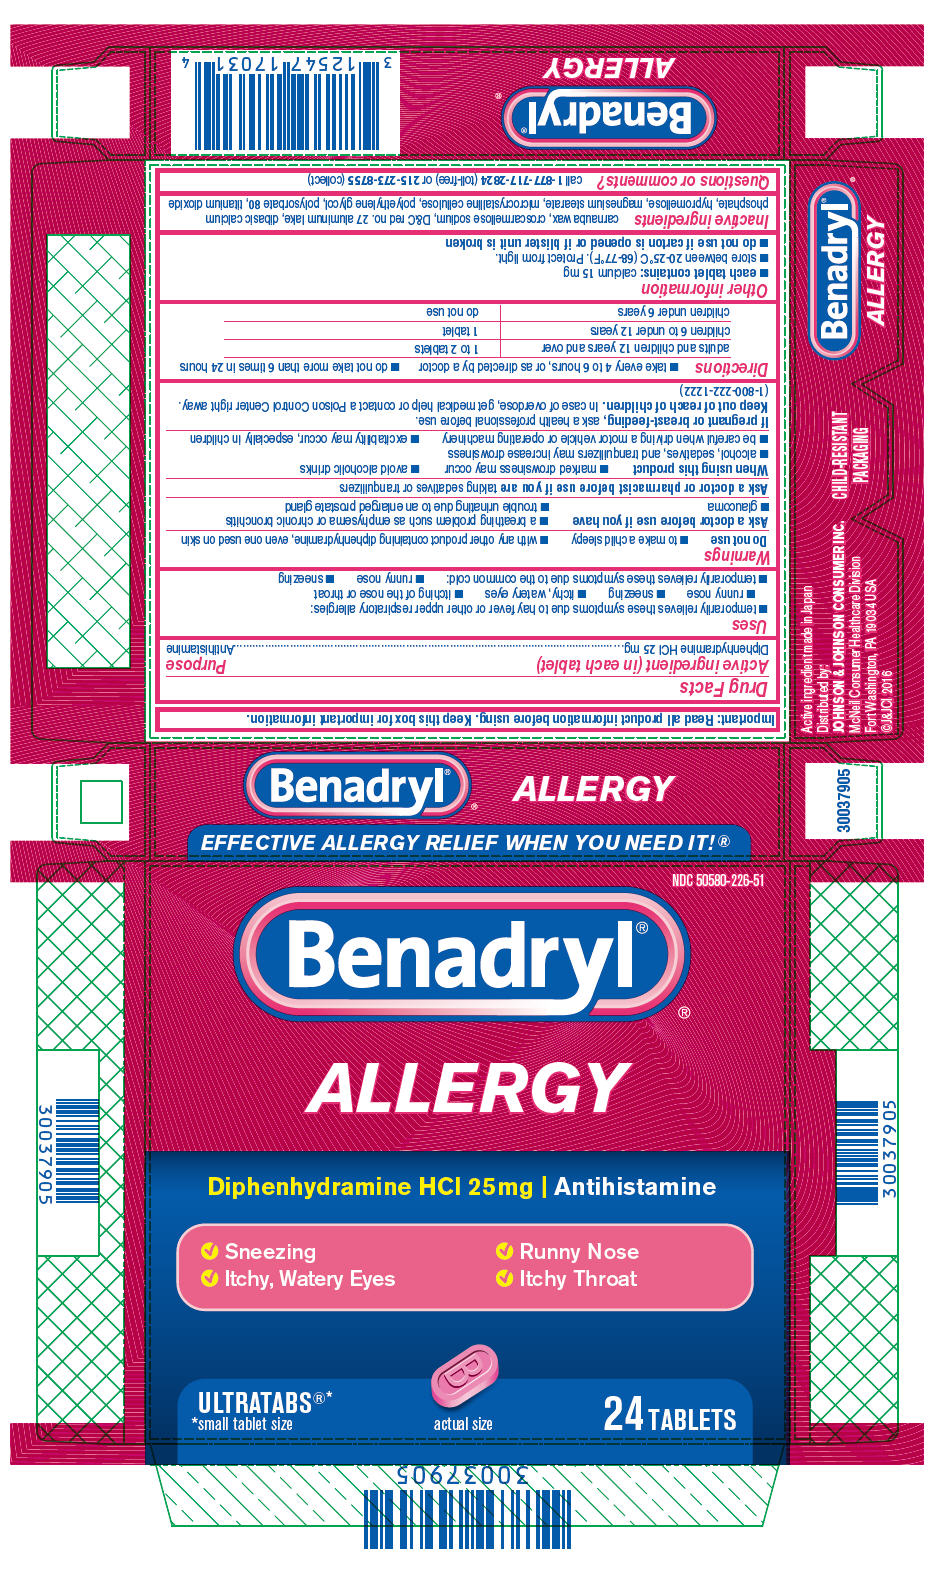 benadryl active ingredients list